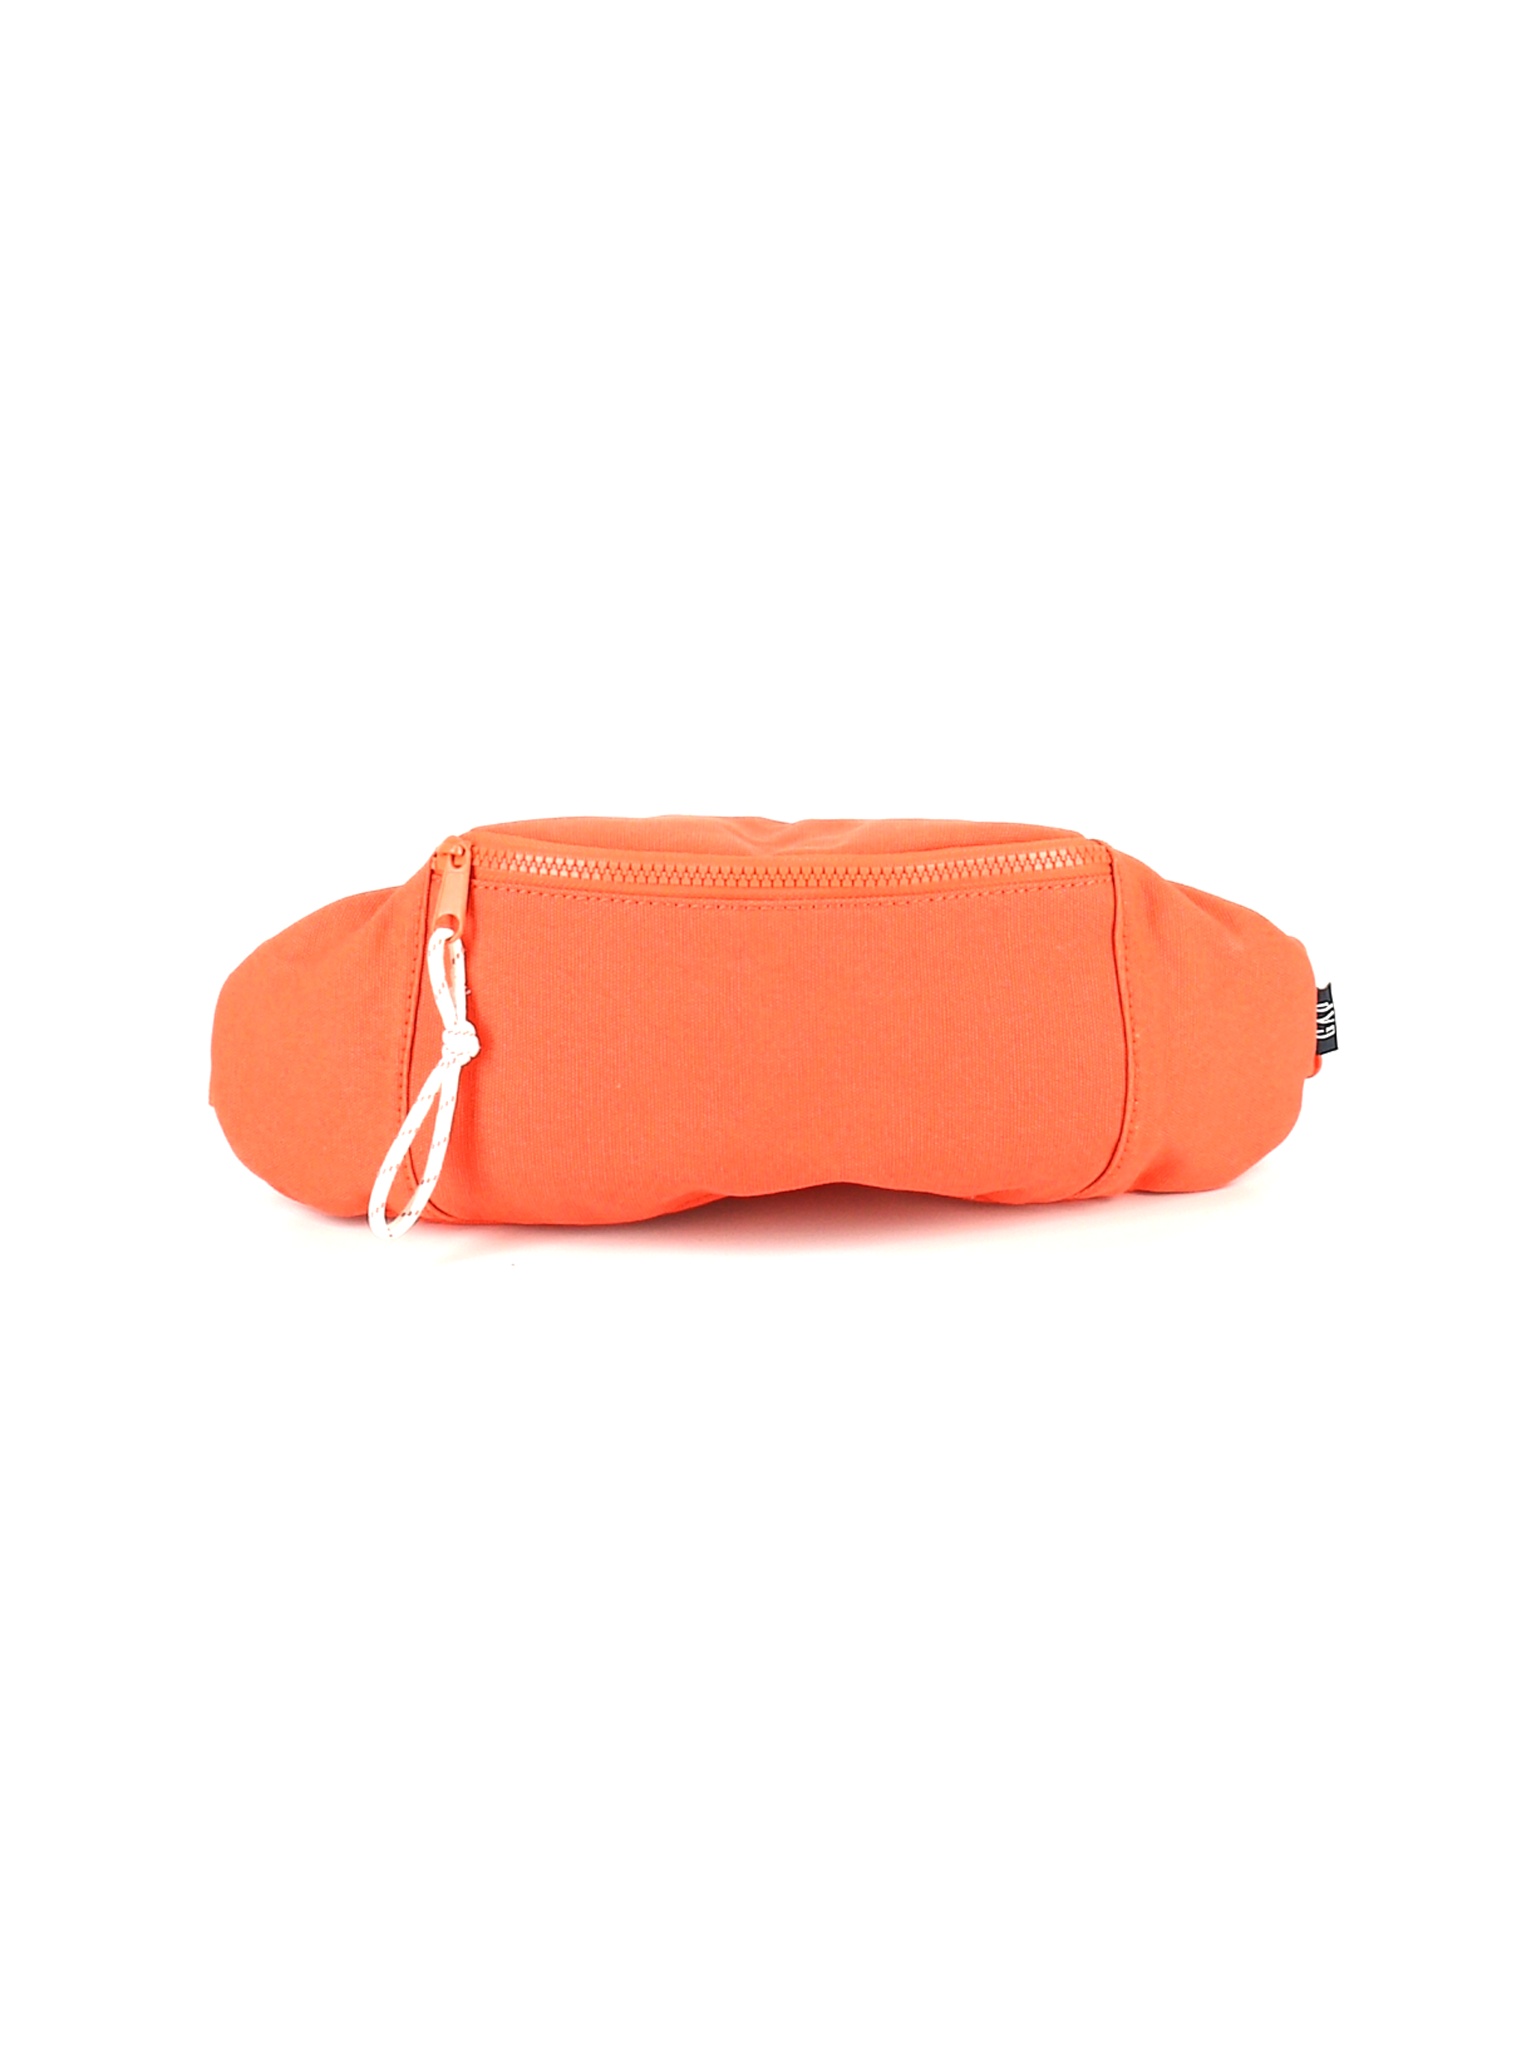 Gap Women Orange Belt Bag One Size | eBay